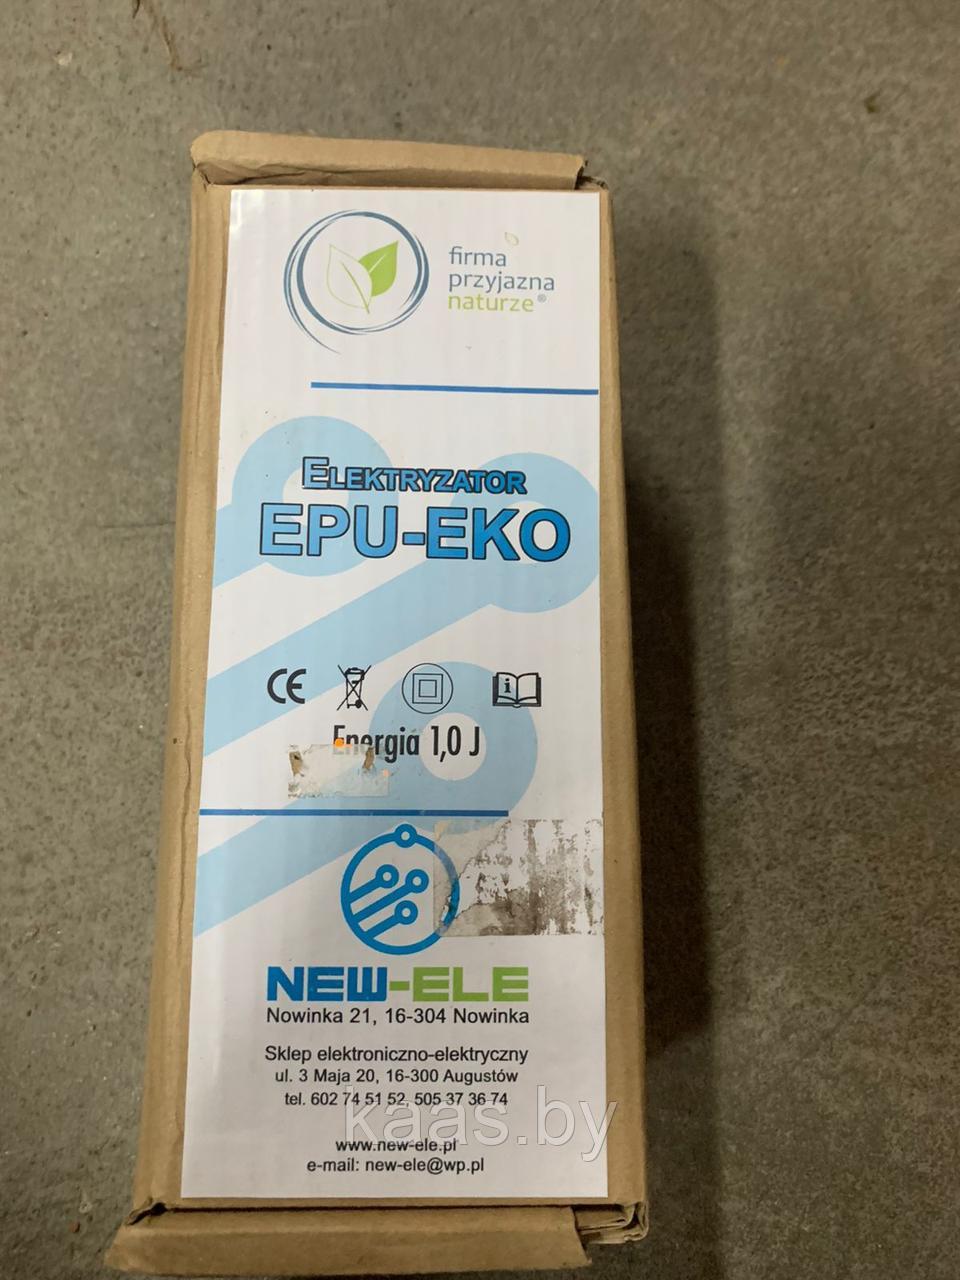 Электропастух Epu-eko